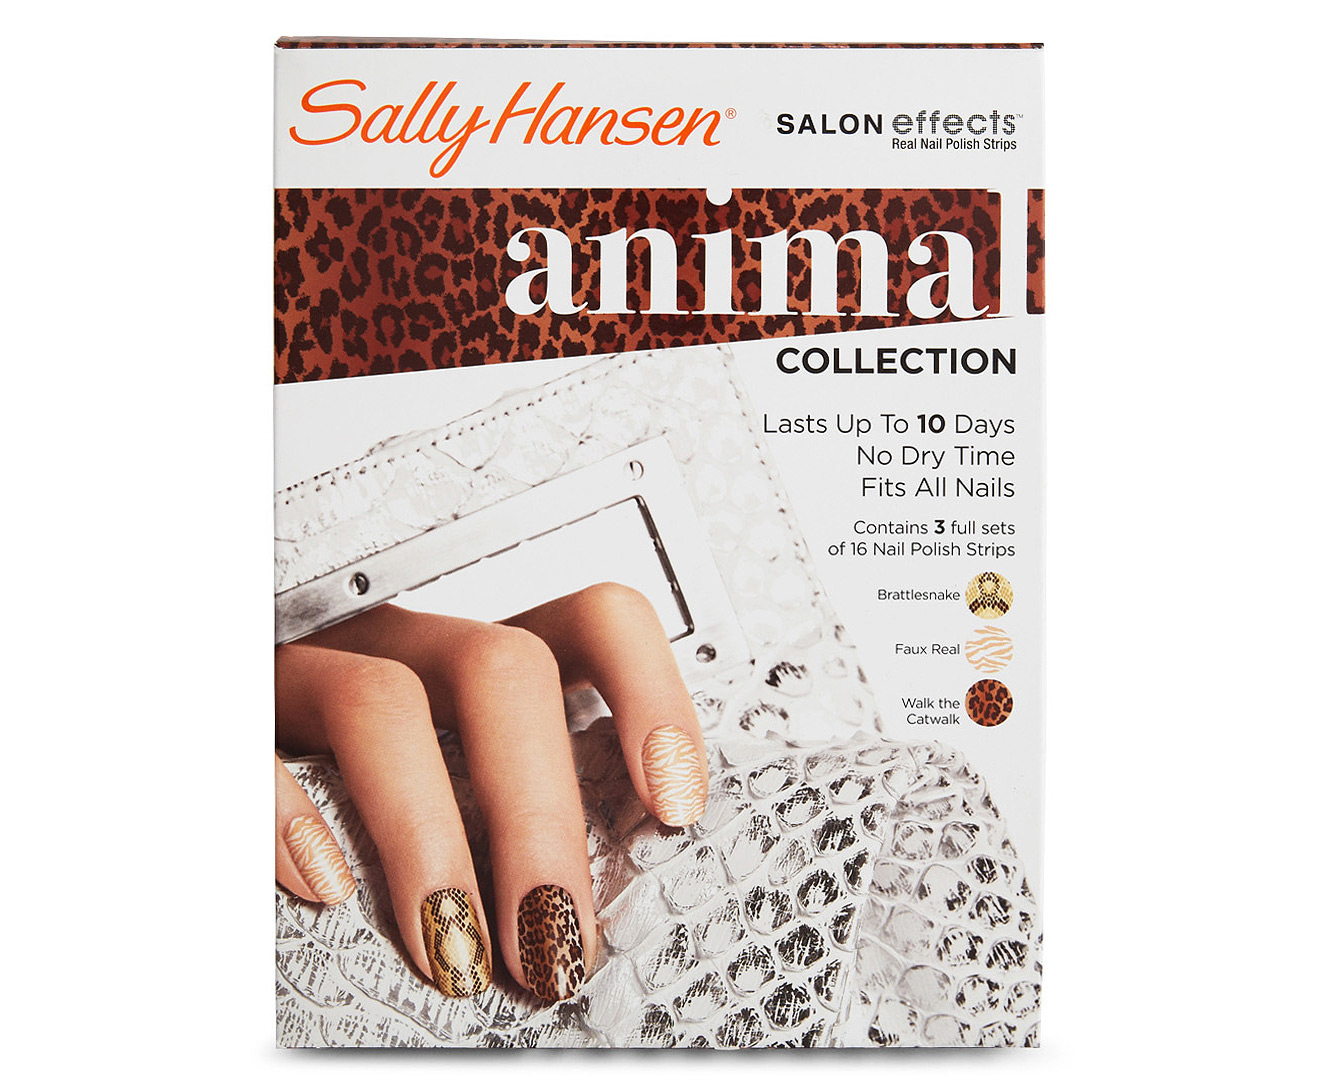 1. Sally Hansen Salon Effects Real Nail Polish Strips - wide 4